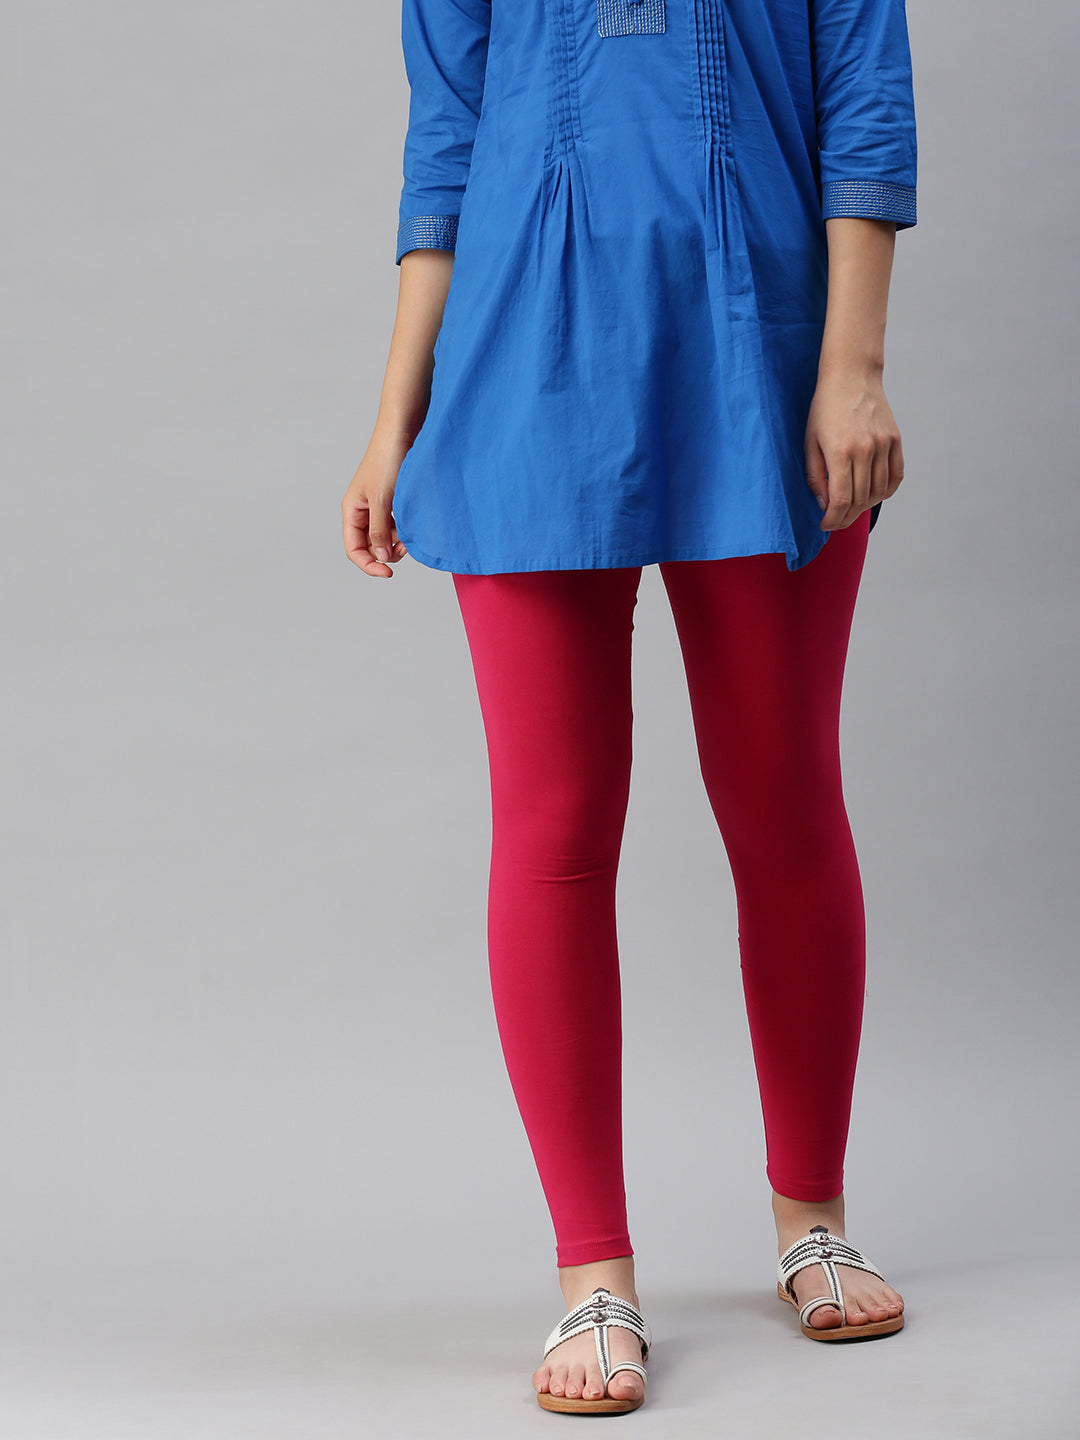 Shop Women's Solid Bright Red Ankle Length Leggings Online | GoColors